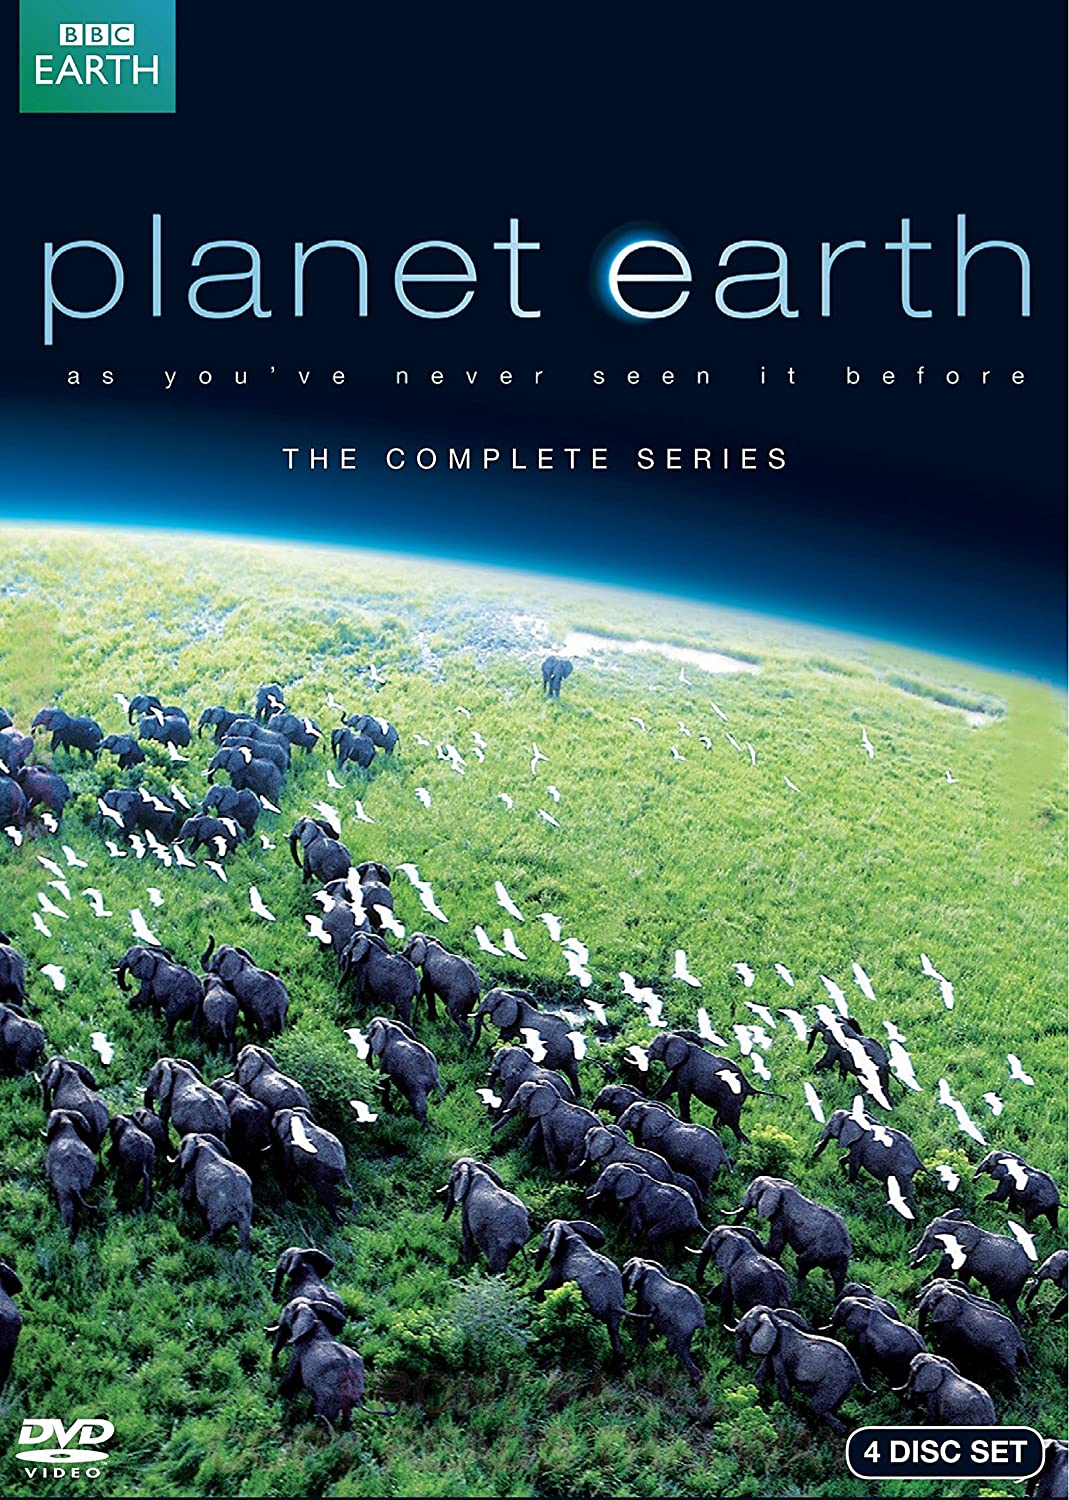 Marathon of the Original 'Planet Earth' Series